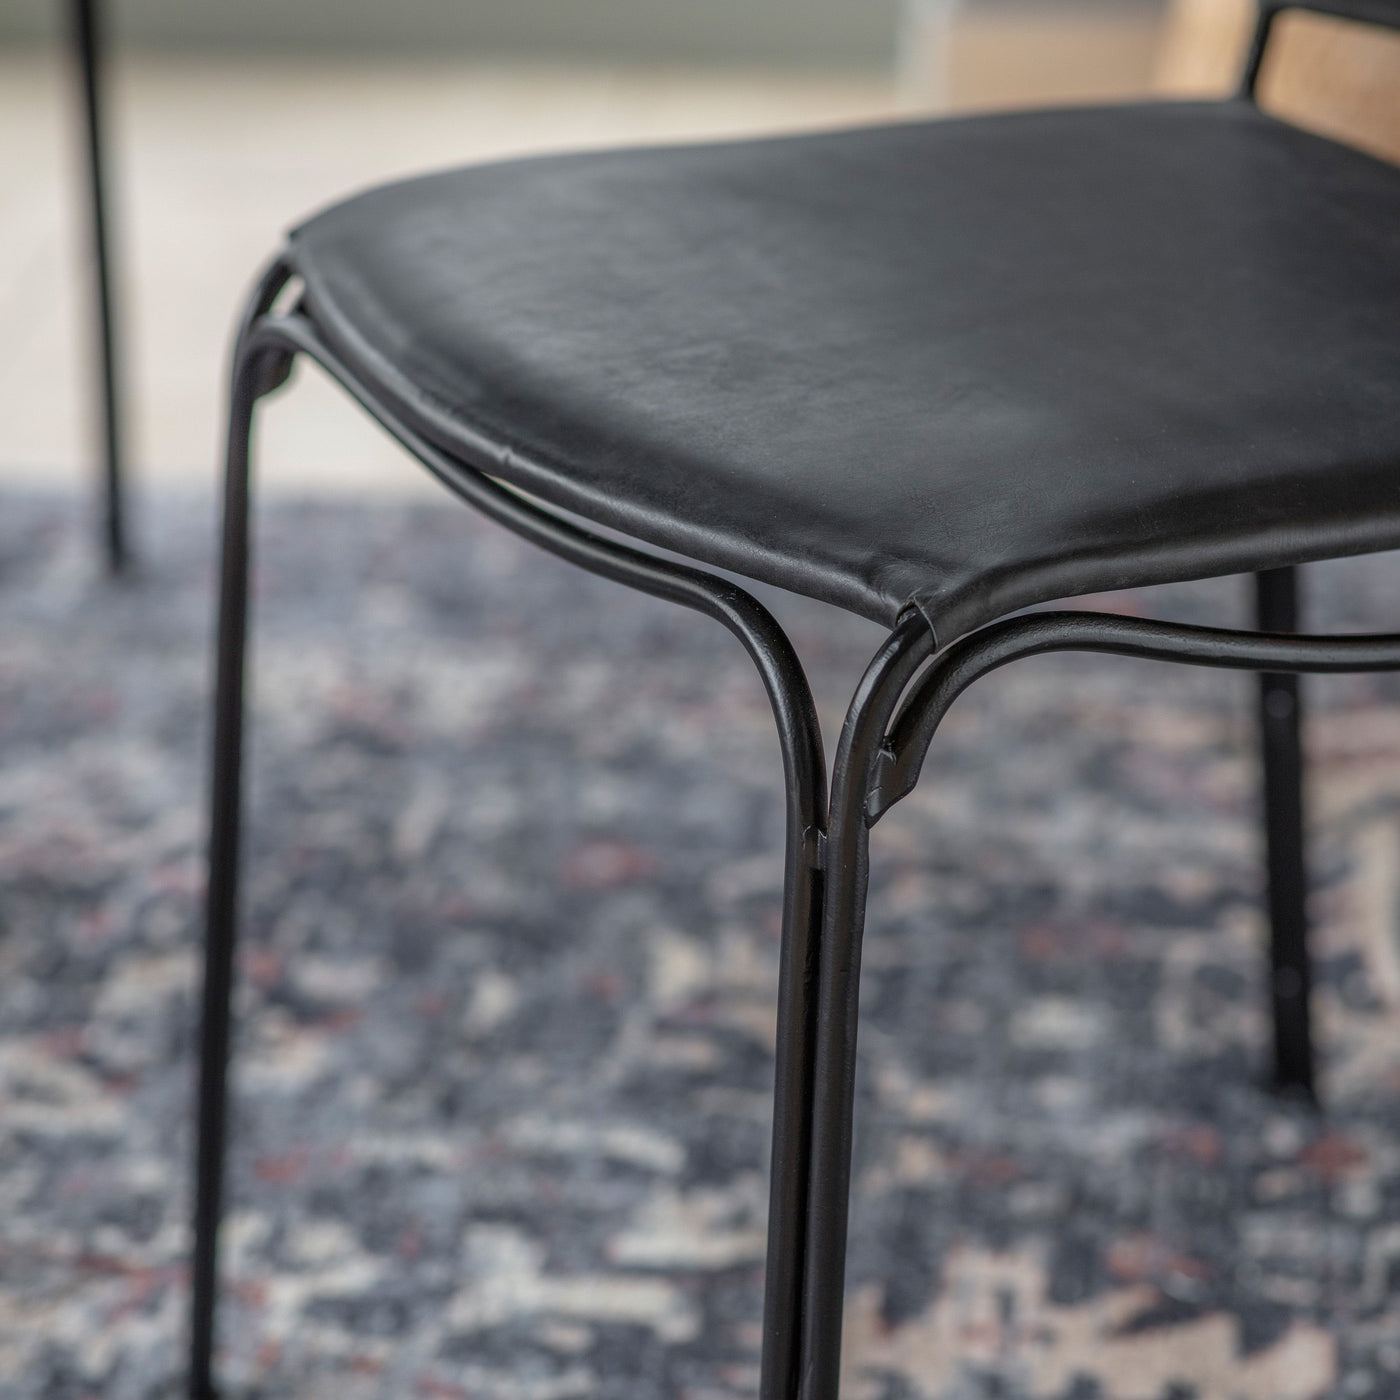 Enniskillen Dining Chair Black (2pk)